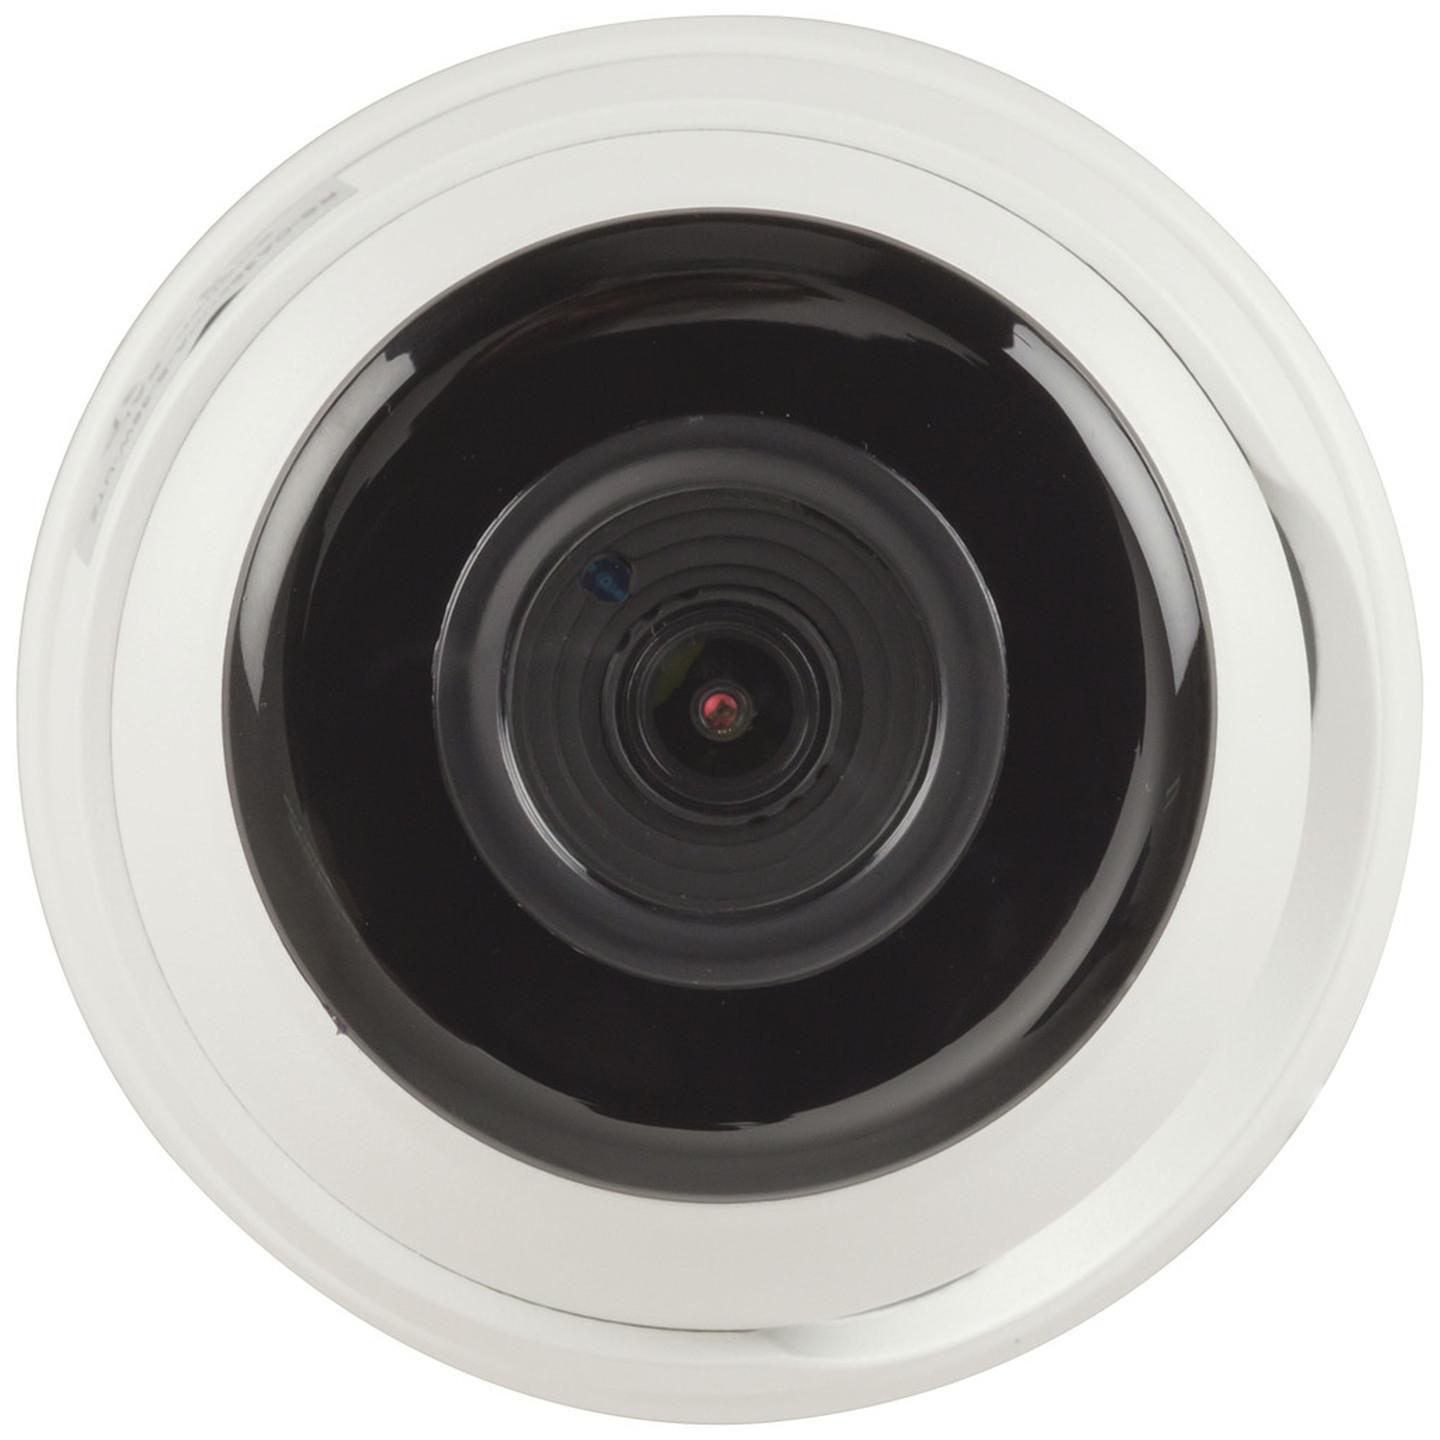 1080p AHD Dome Camera with IR